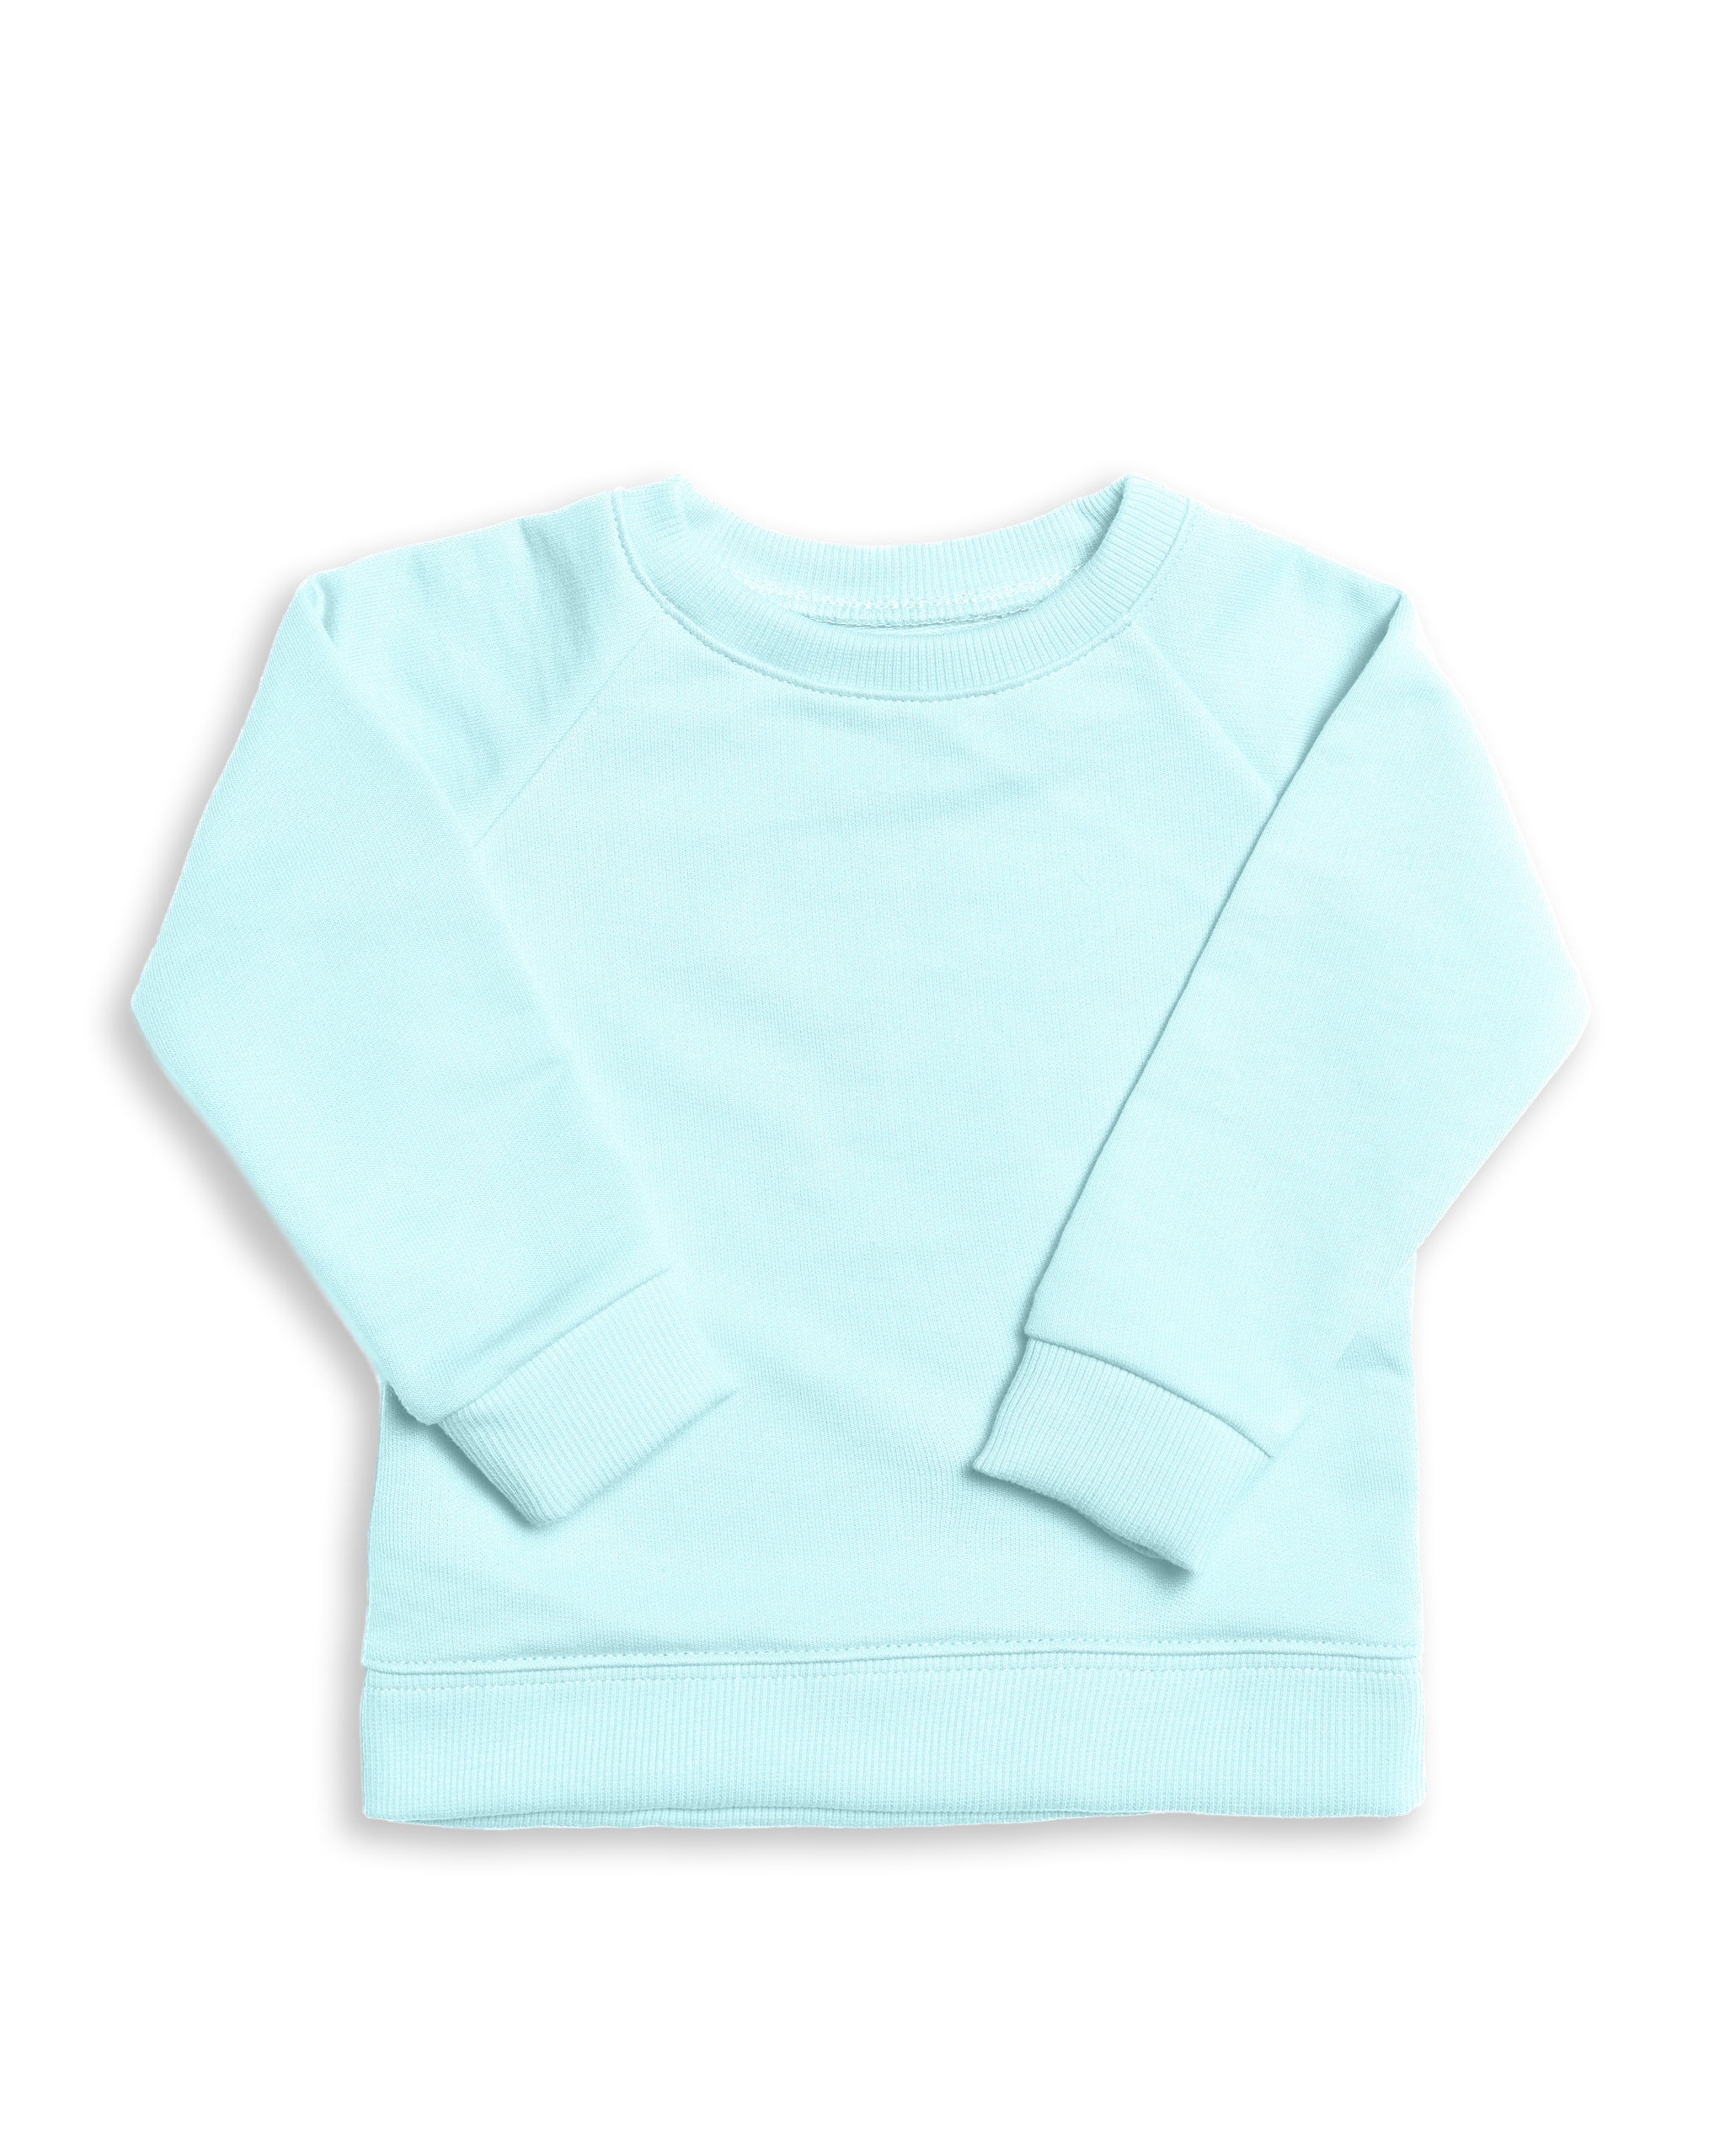 The Organic Pullover Sweatshirt [Aqua]